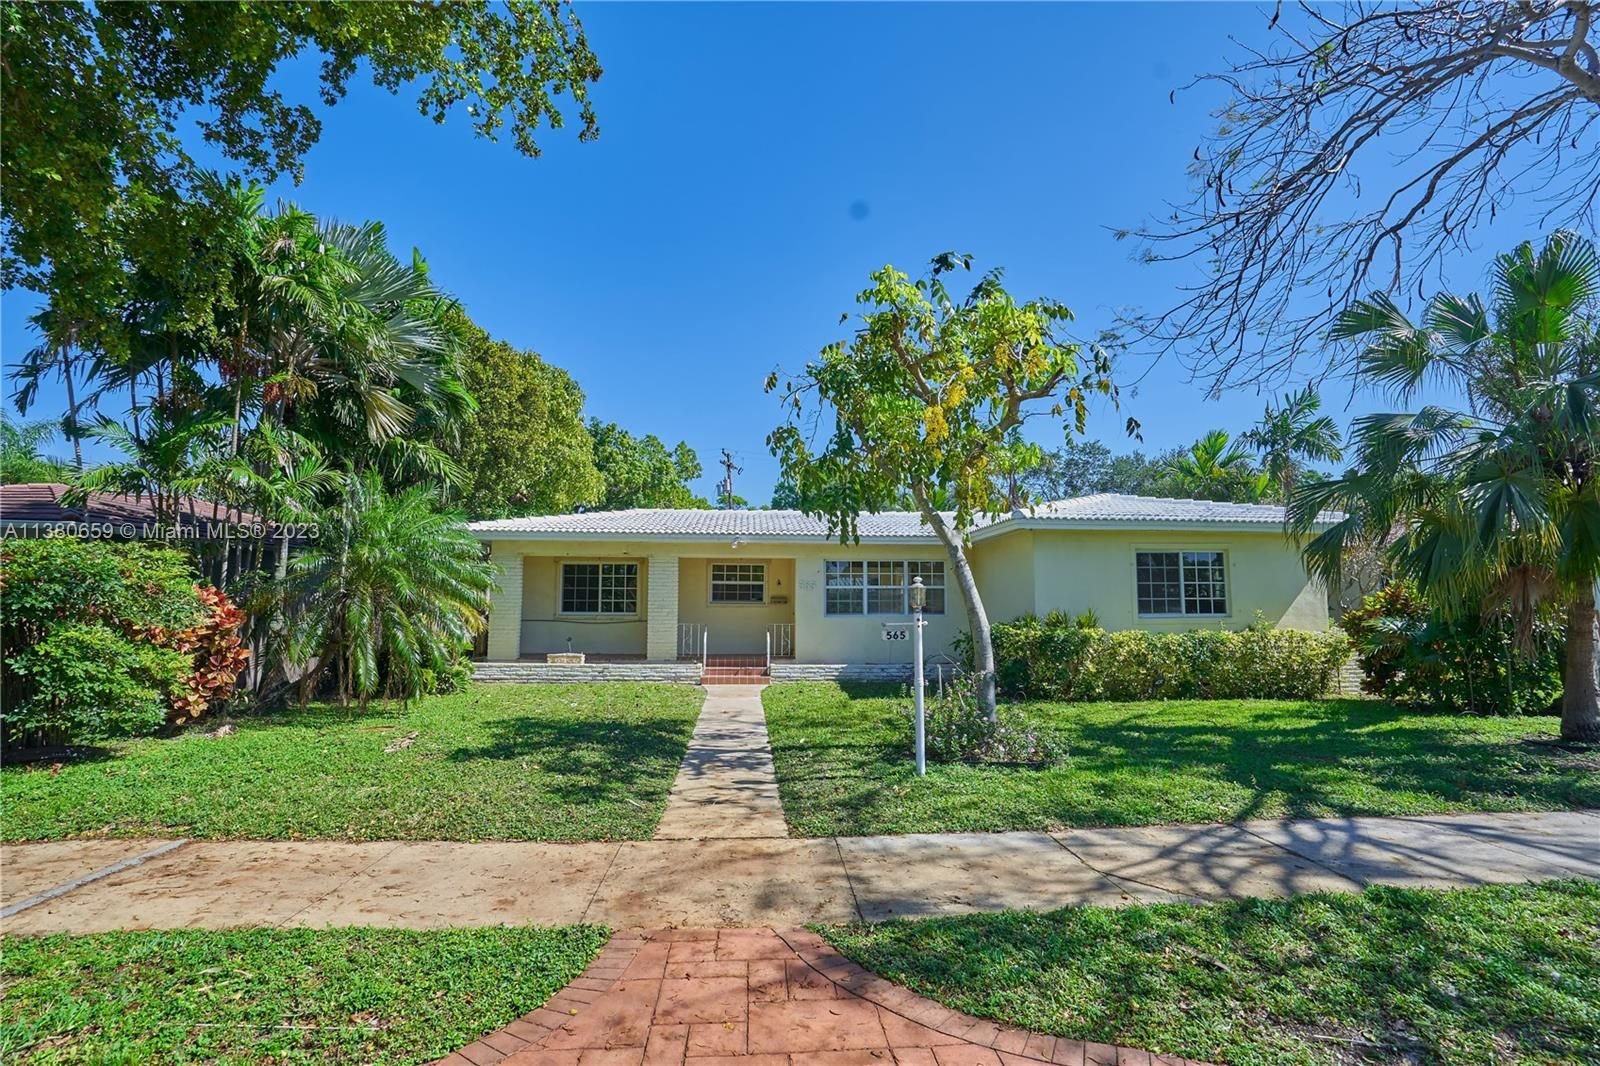 Real estate property located at 565 105th St, Miami-Dade County, Miami Shores, FL